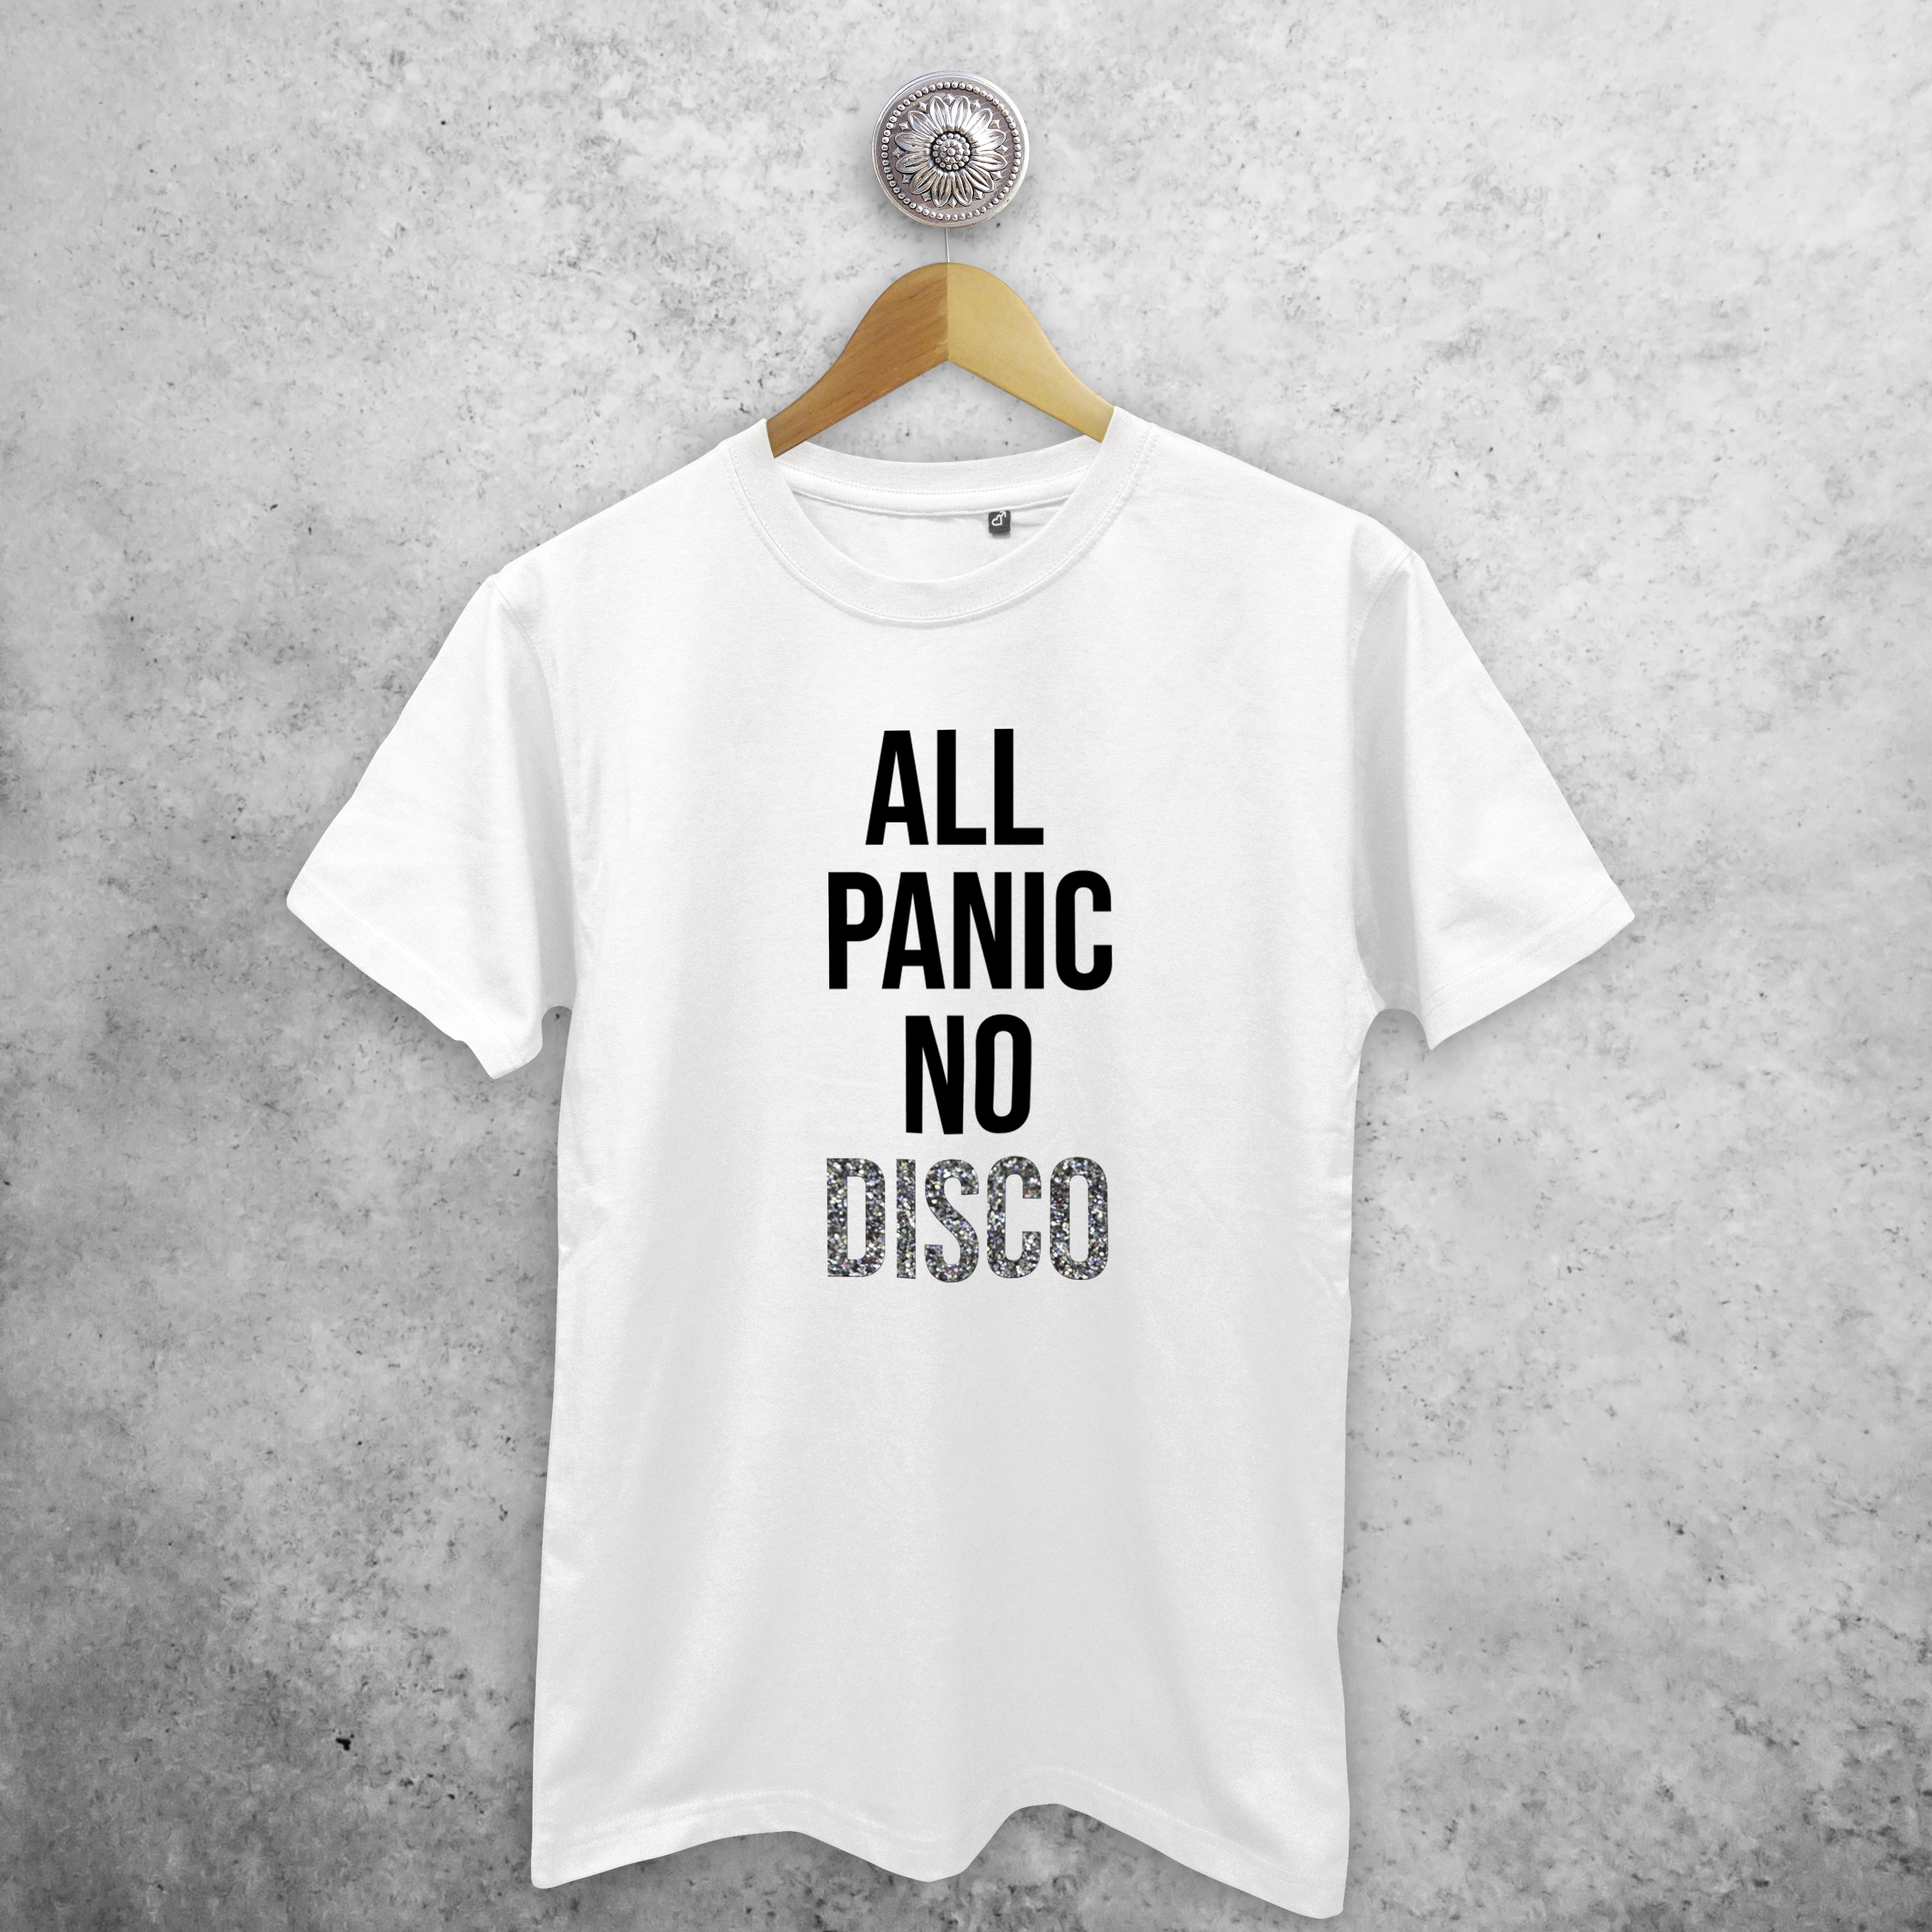 'All panic no disco' adult shirt